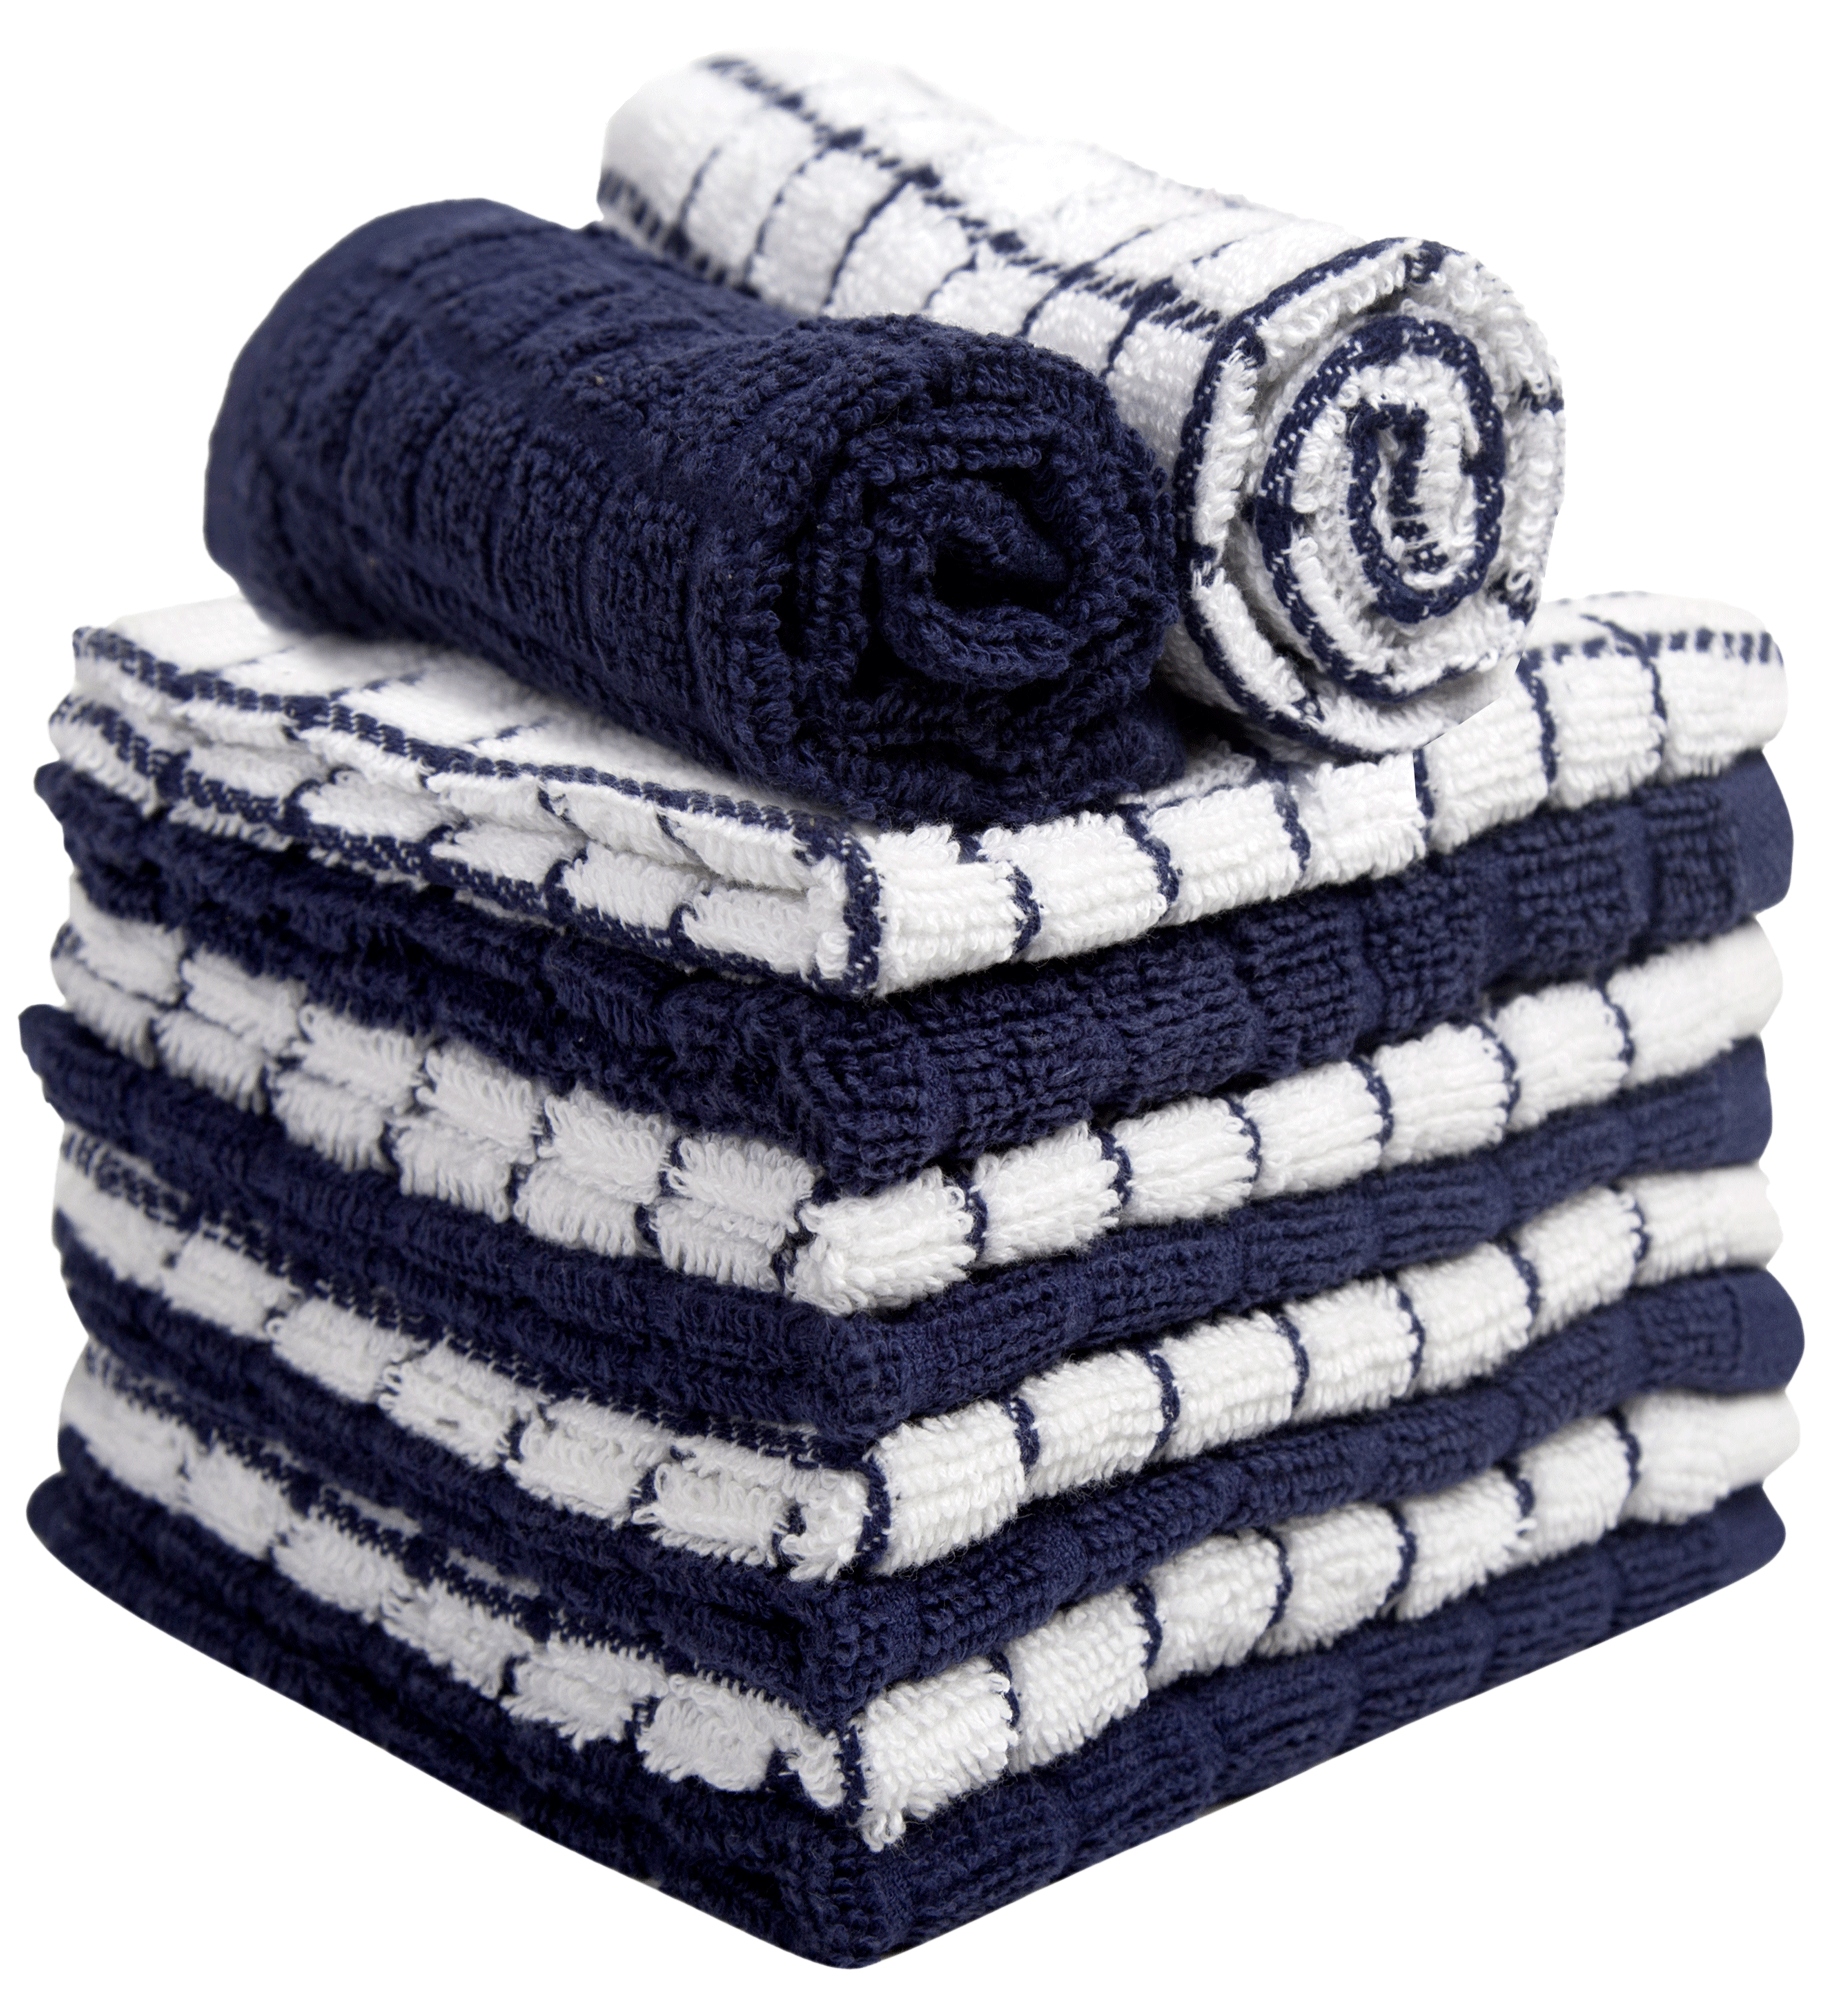 Buy Solid Ribbed Kitchen Towel Sets at Bumble Towels